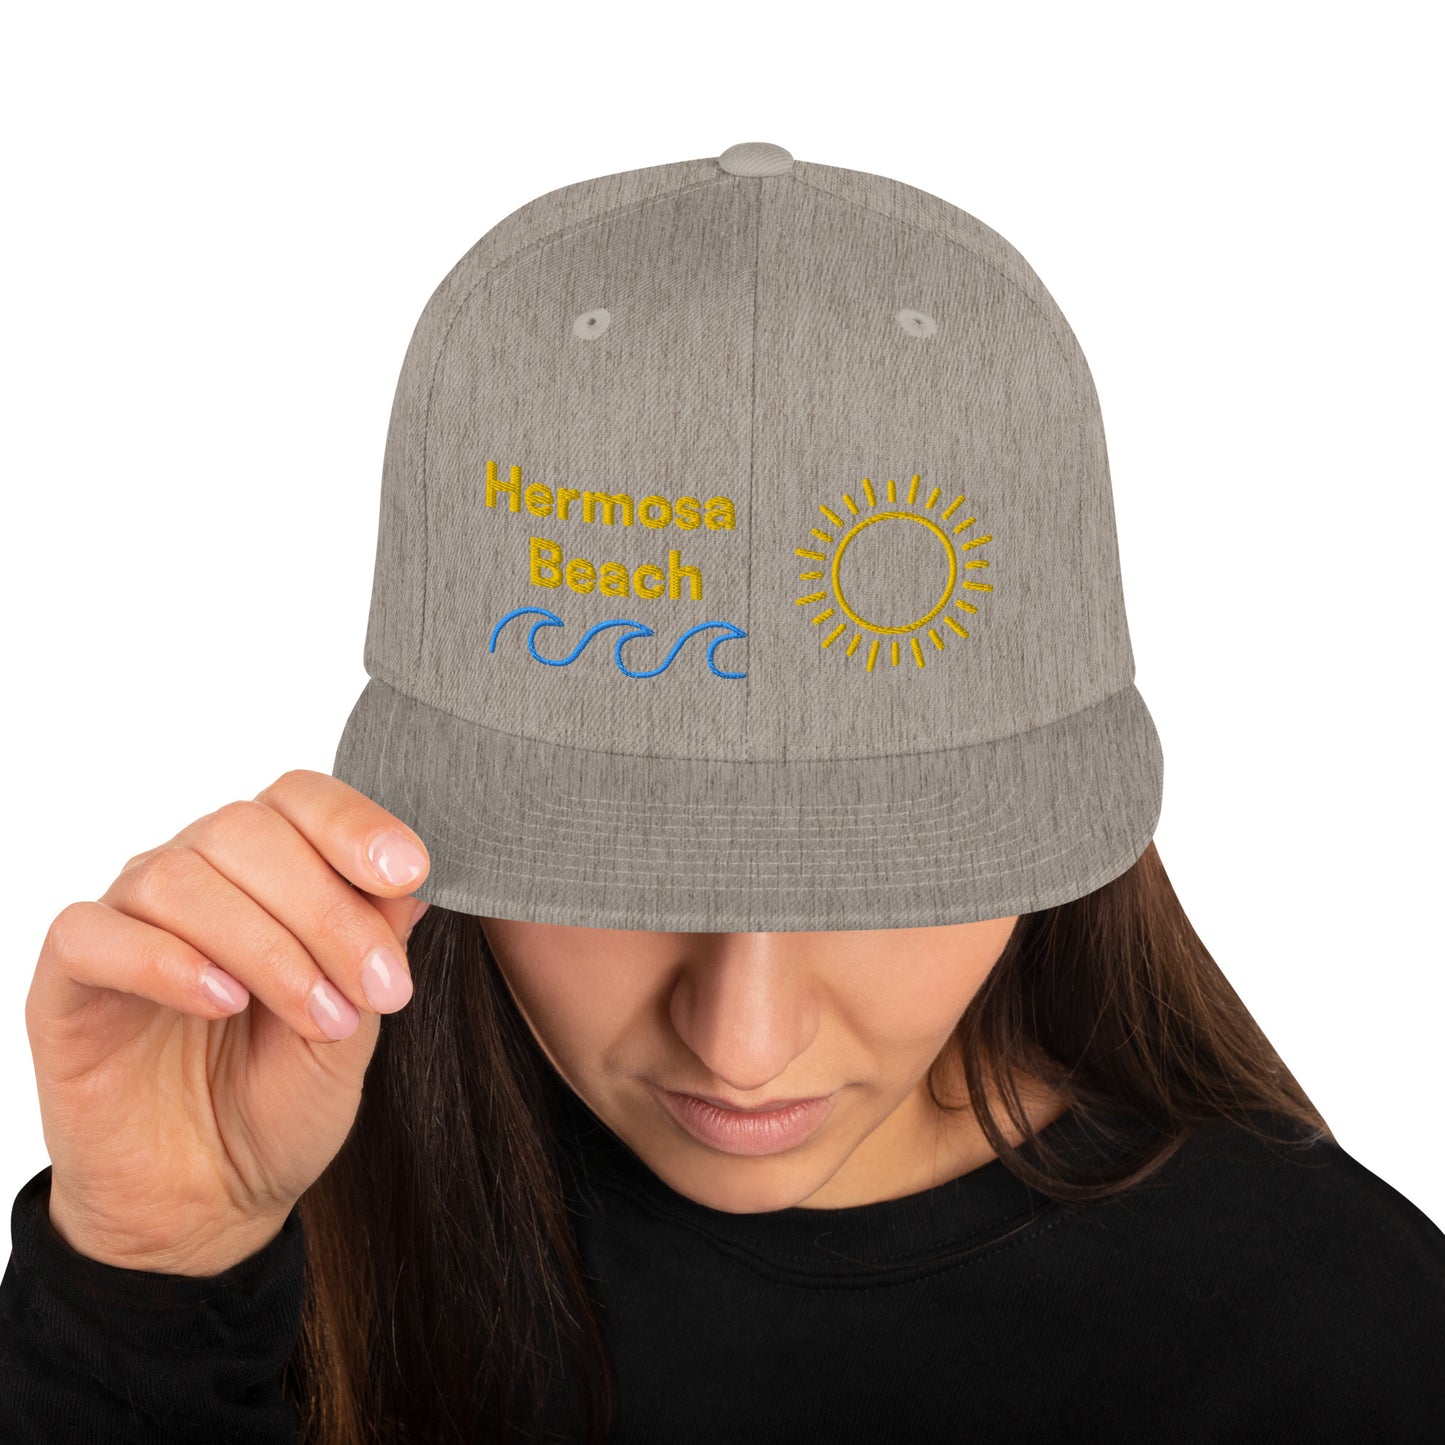 Hermosa Beach - California - 90254 - Snapback Hat